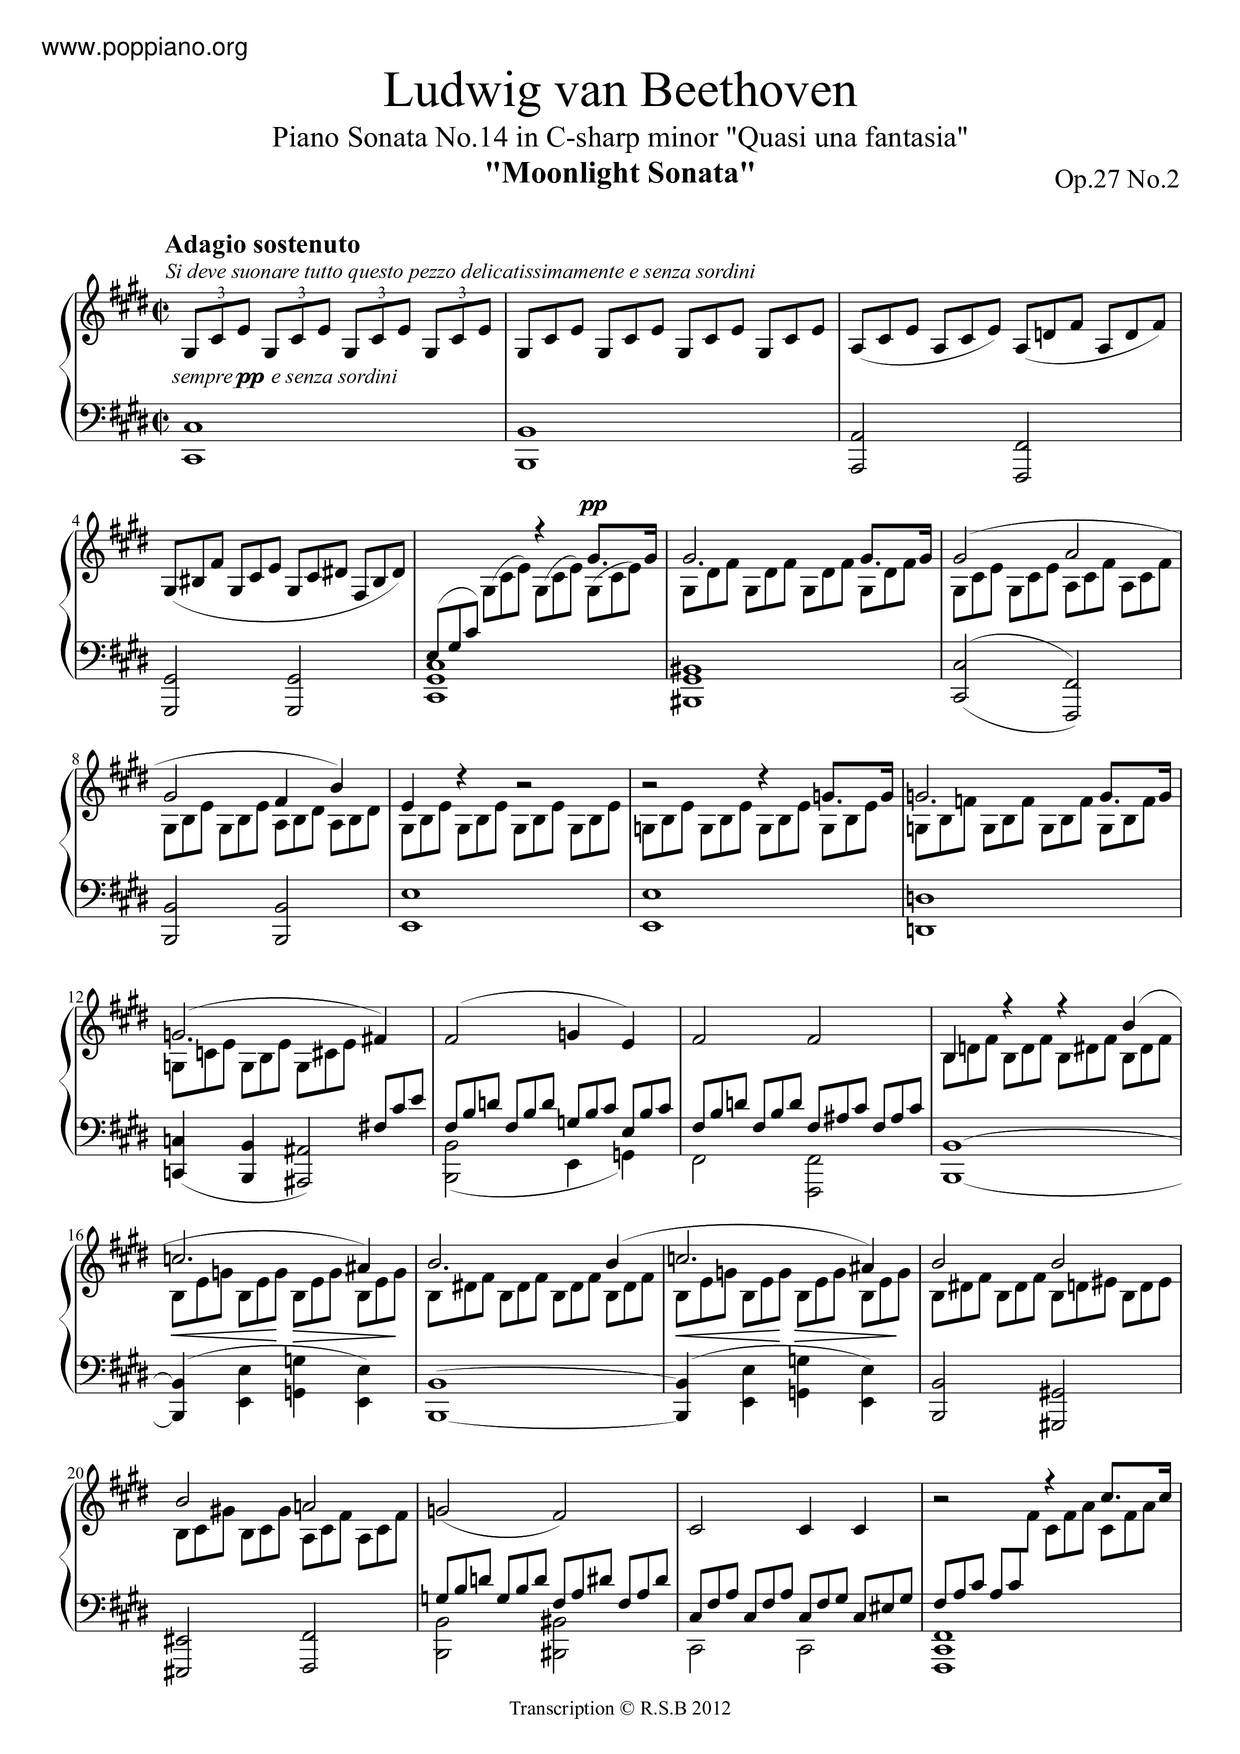 Piano Sonata No. 14 In C-Sharp Minor 'Moonlight Sonata', Op. 27 No. 2 Score